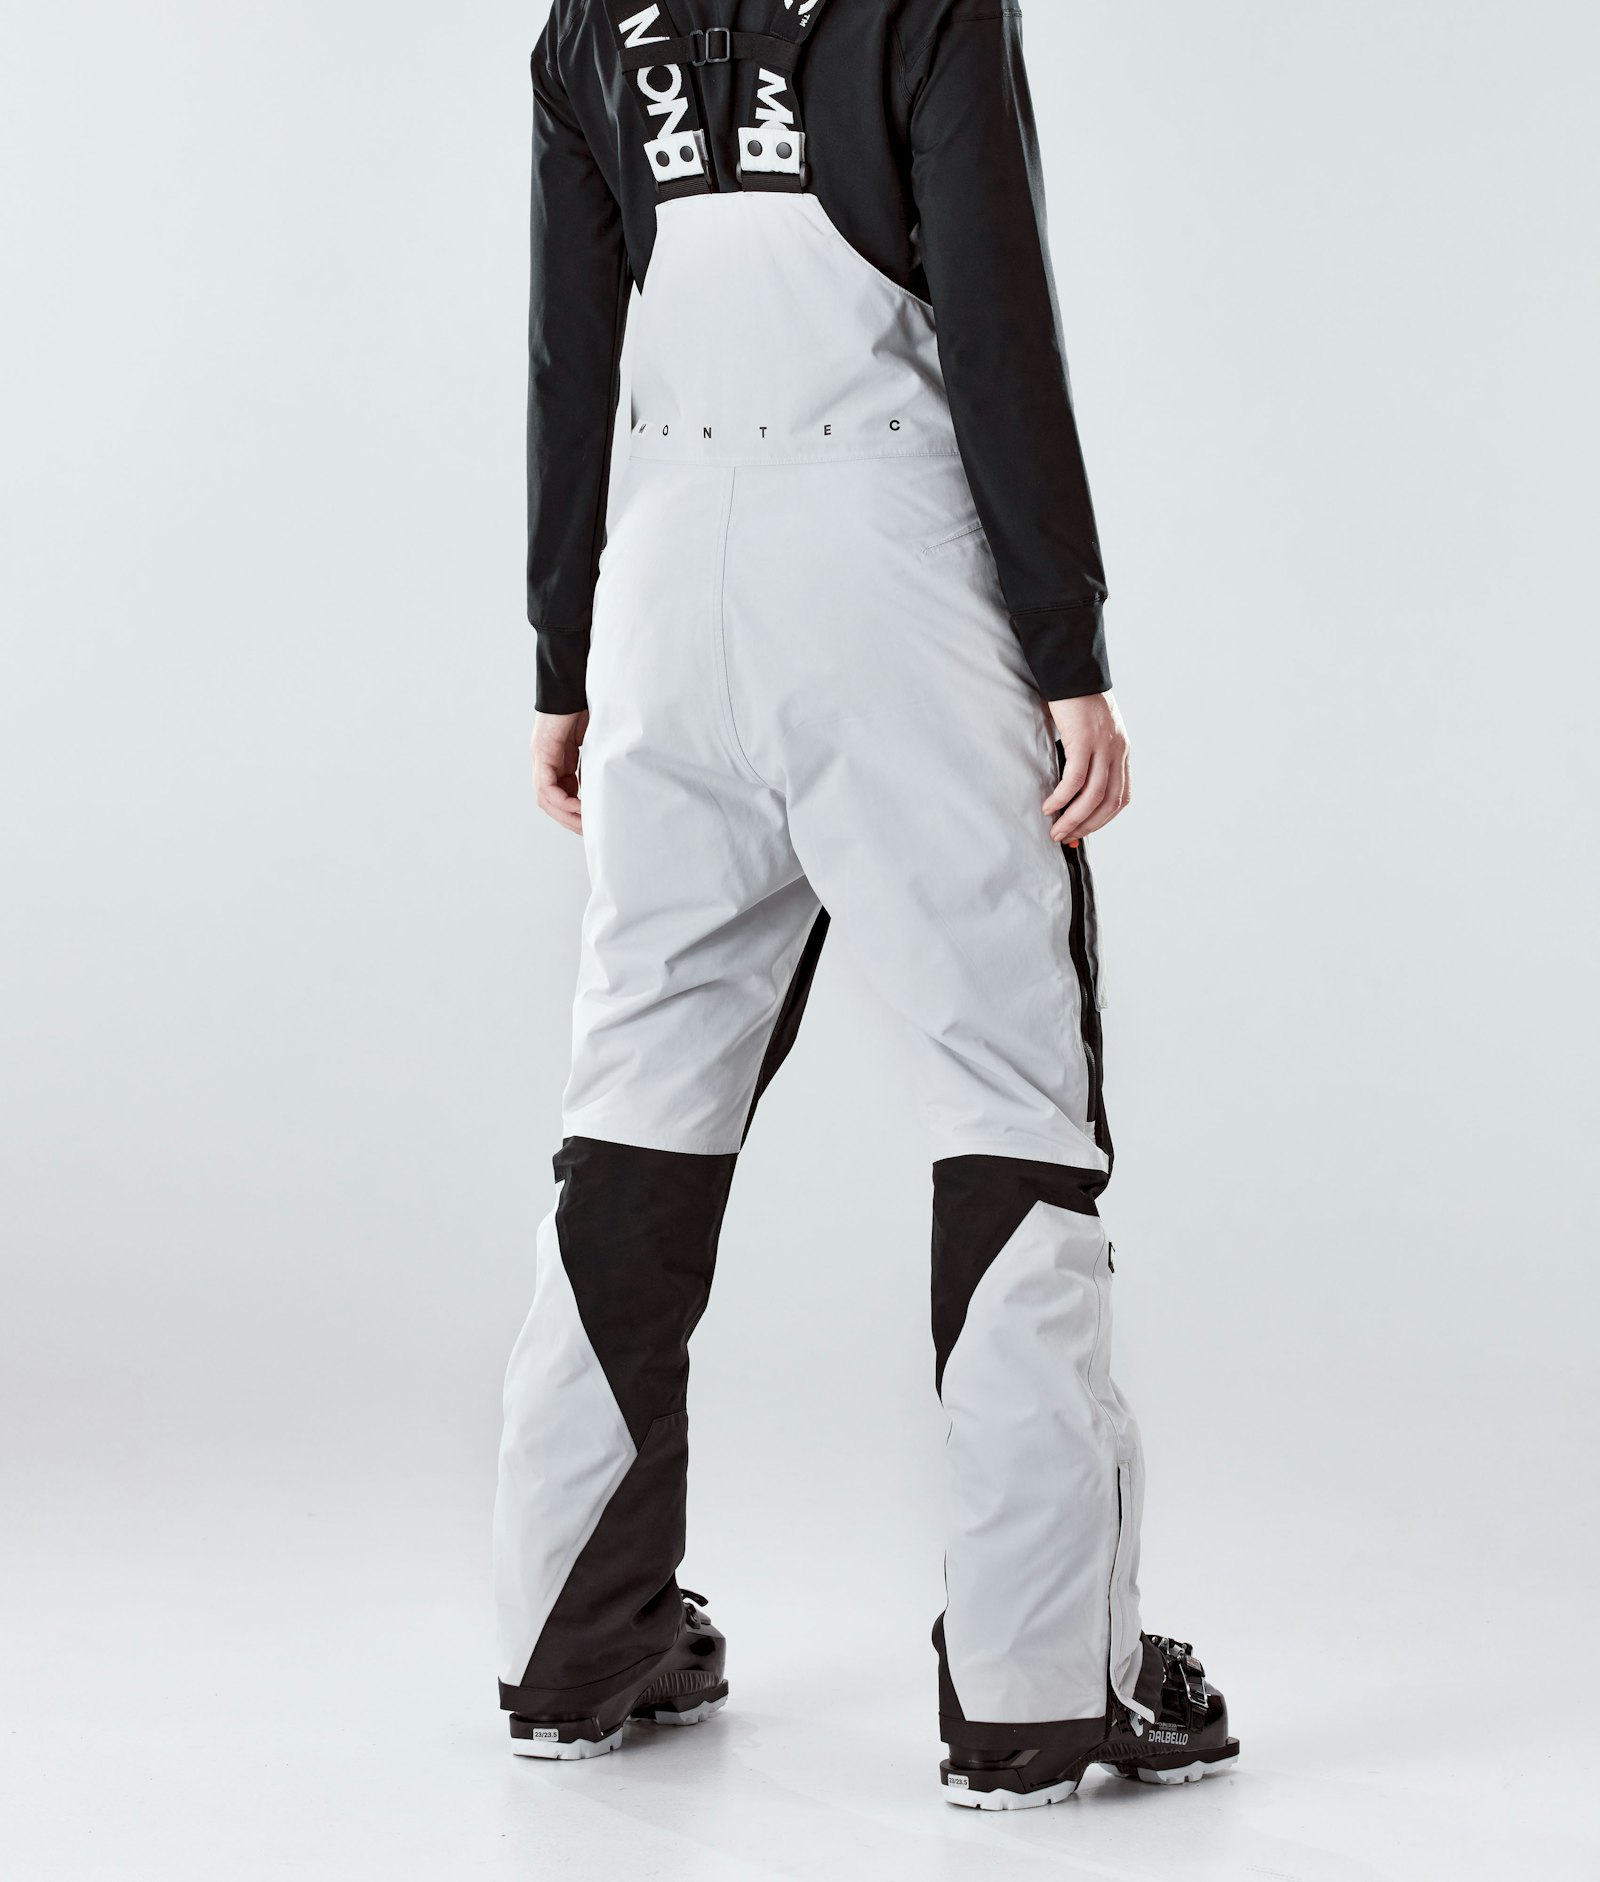 Montec Fawk W 2020 Pantalones Esquí Mujer Light Grey/Black